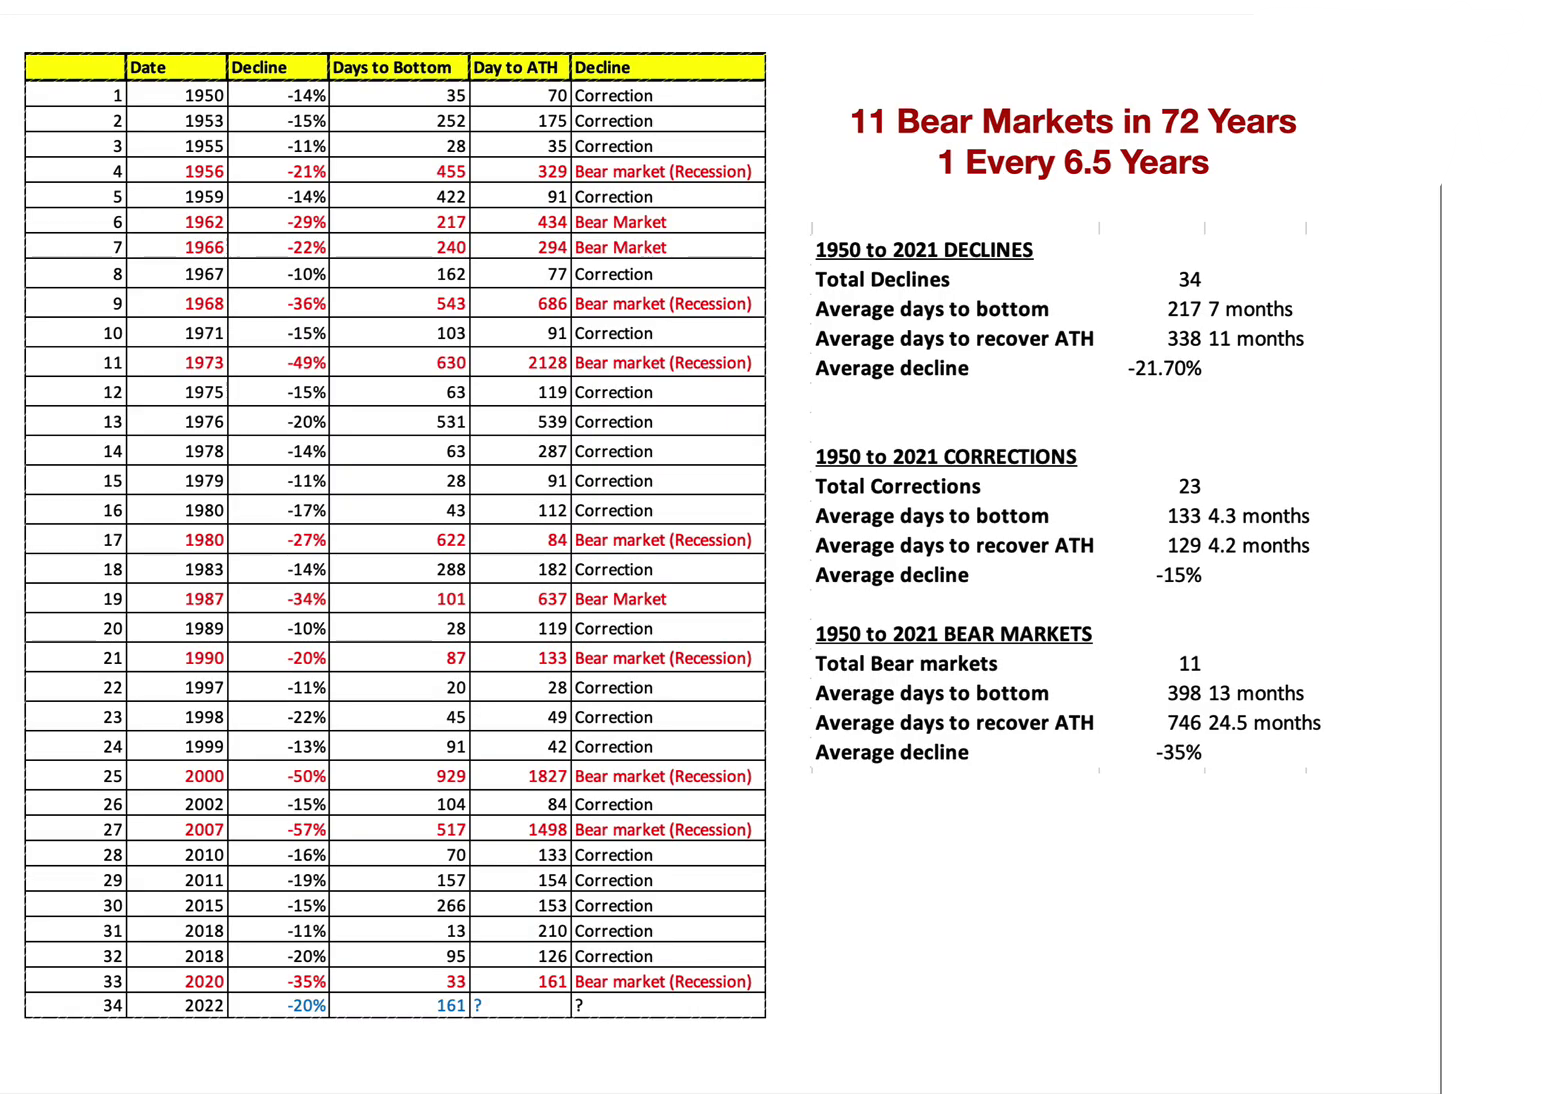 a1-11 bear markets in 72 years